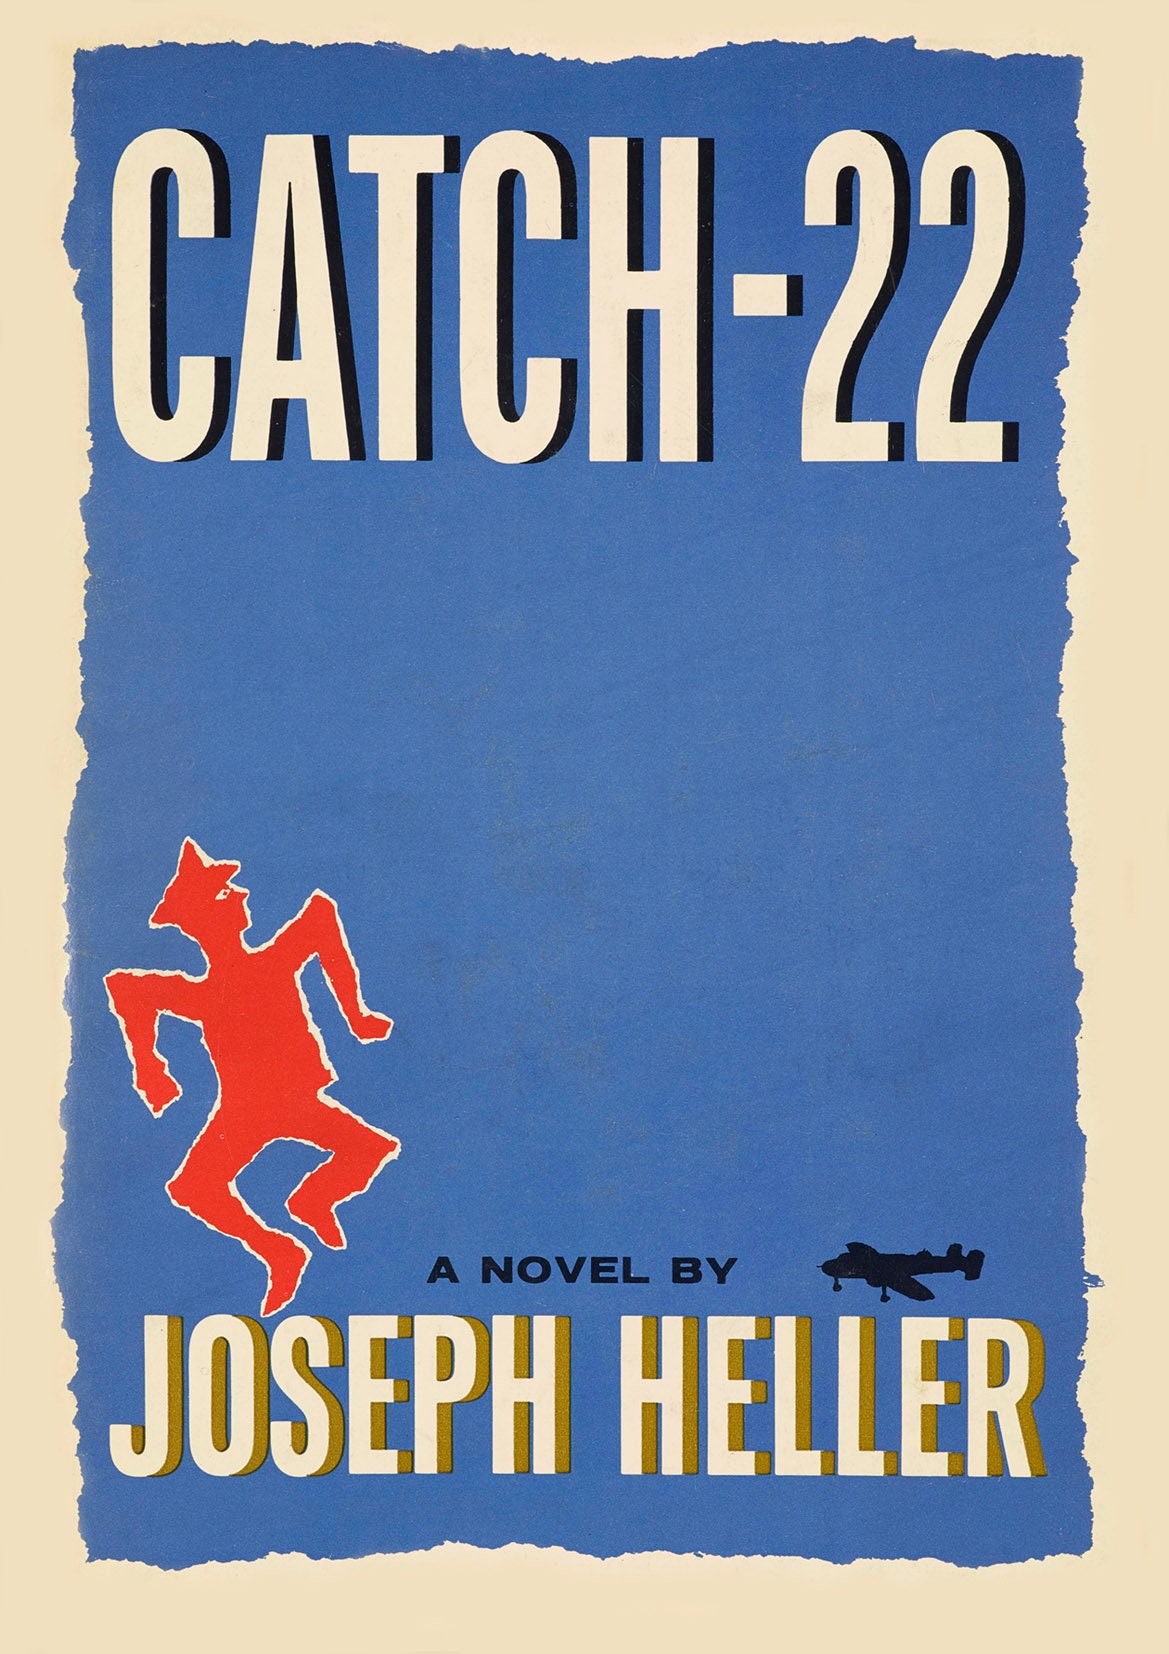 Catch-22 Poster: Joseph Heller Book Cover Print - Etsy